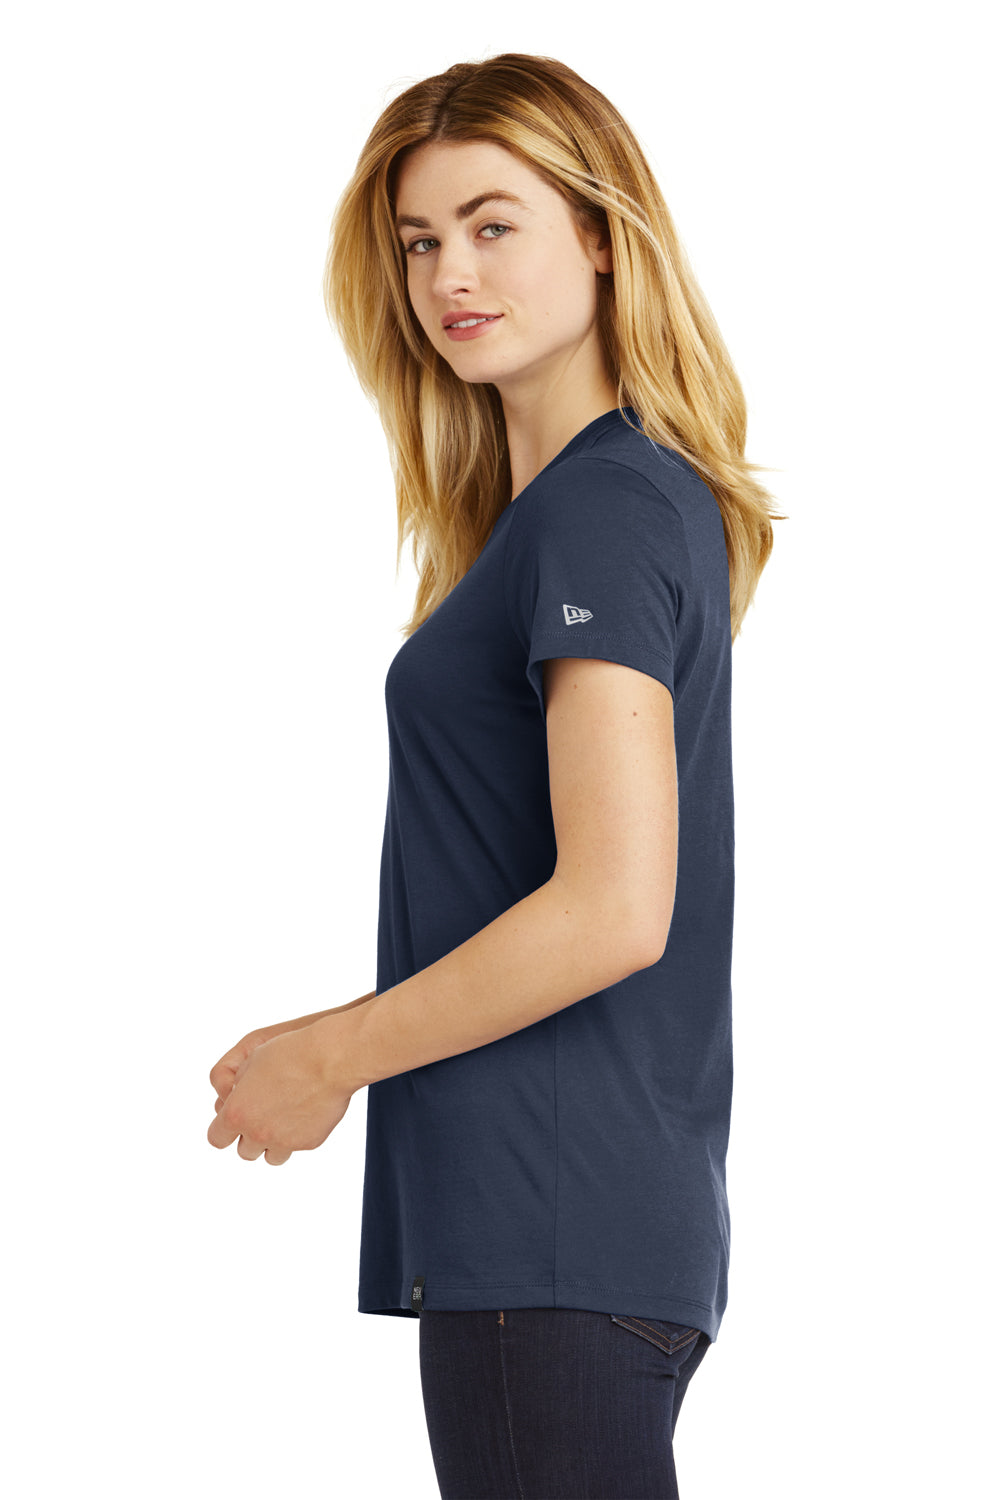 New Era LNEA100 Womens Heritage Short Sleeve Crewneck T-Shirt Navy Blue Side